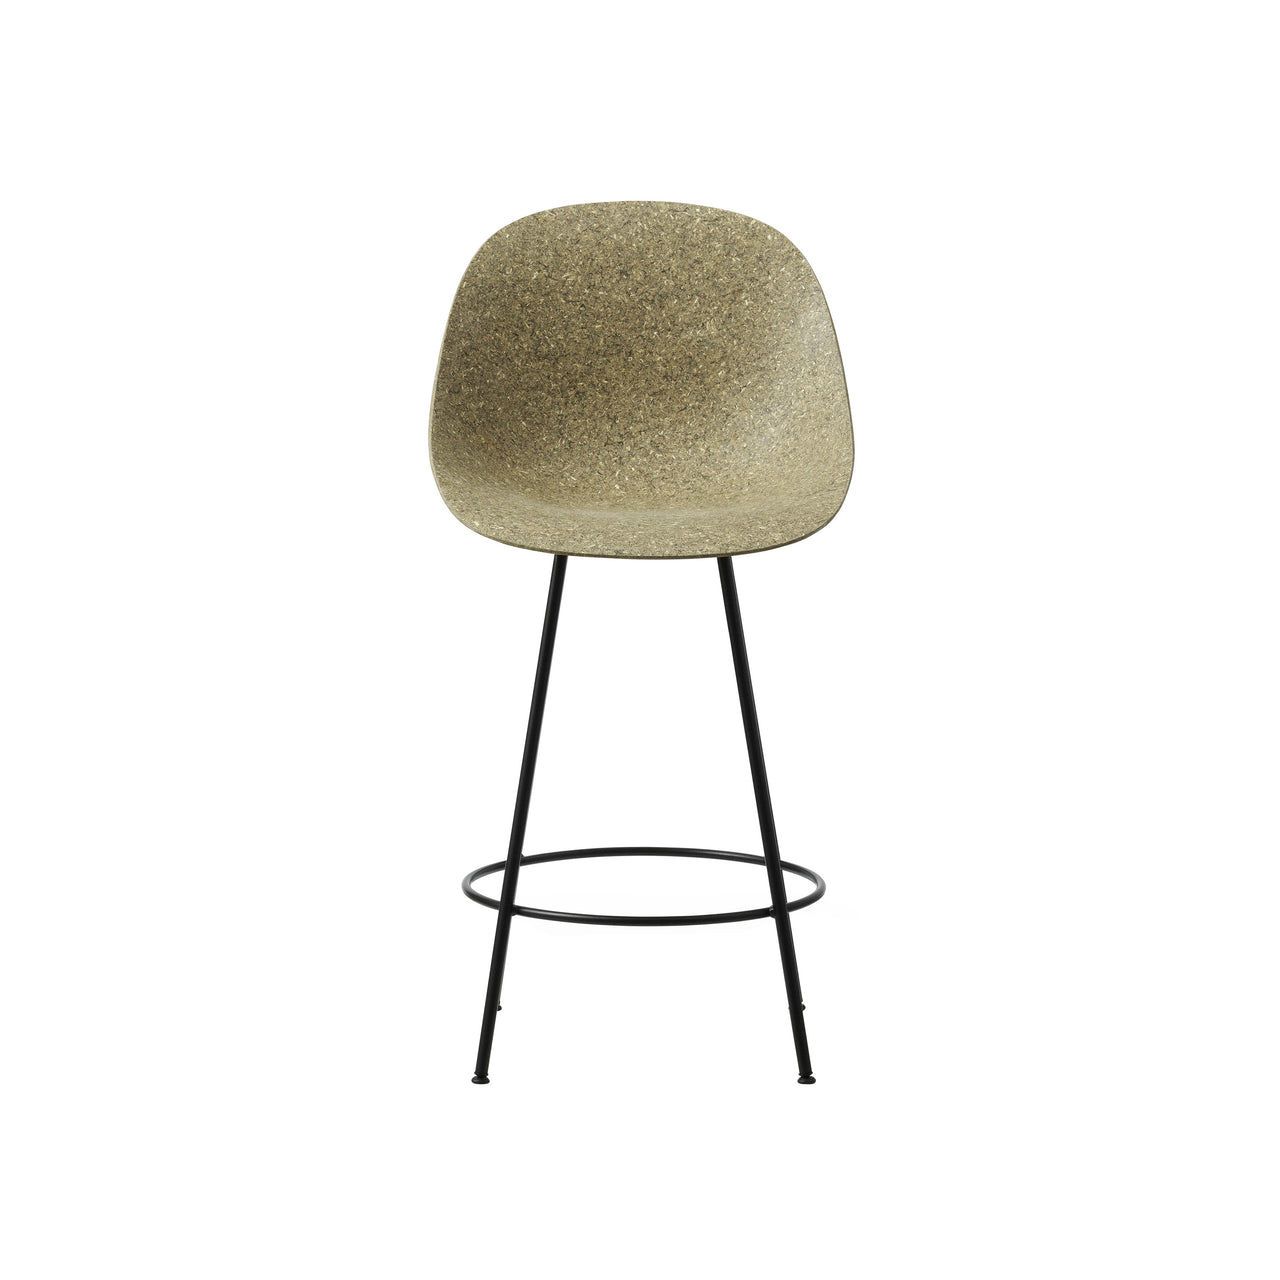 Mat Bar + Counter Chair: Counter + Seaweed + Black